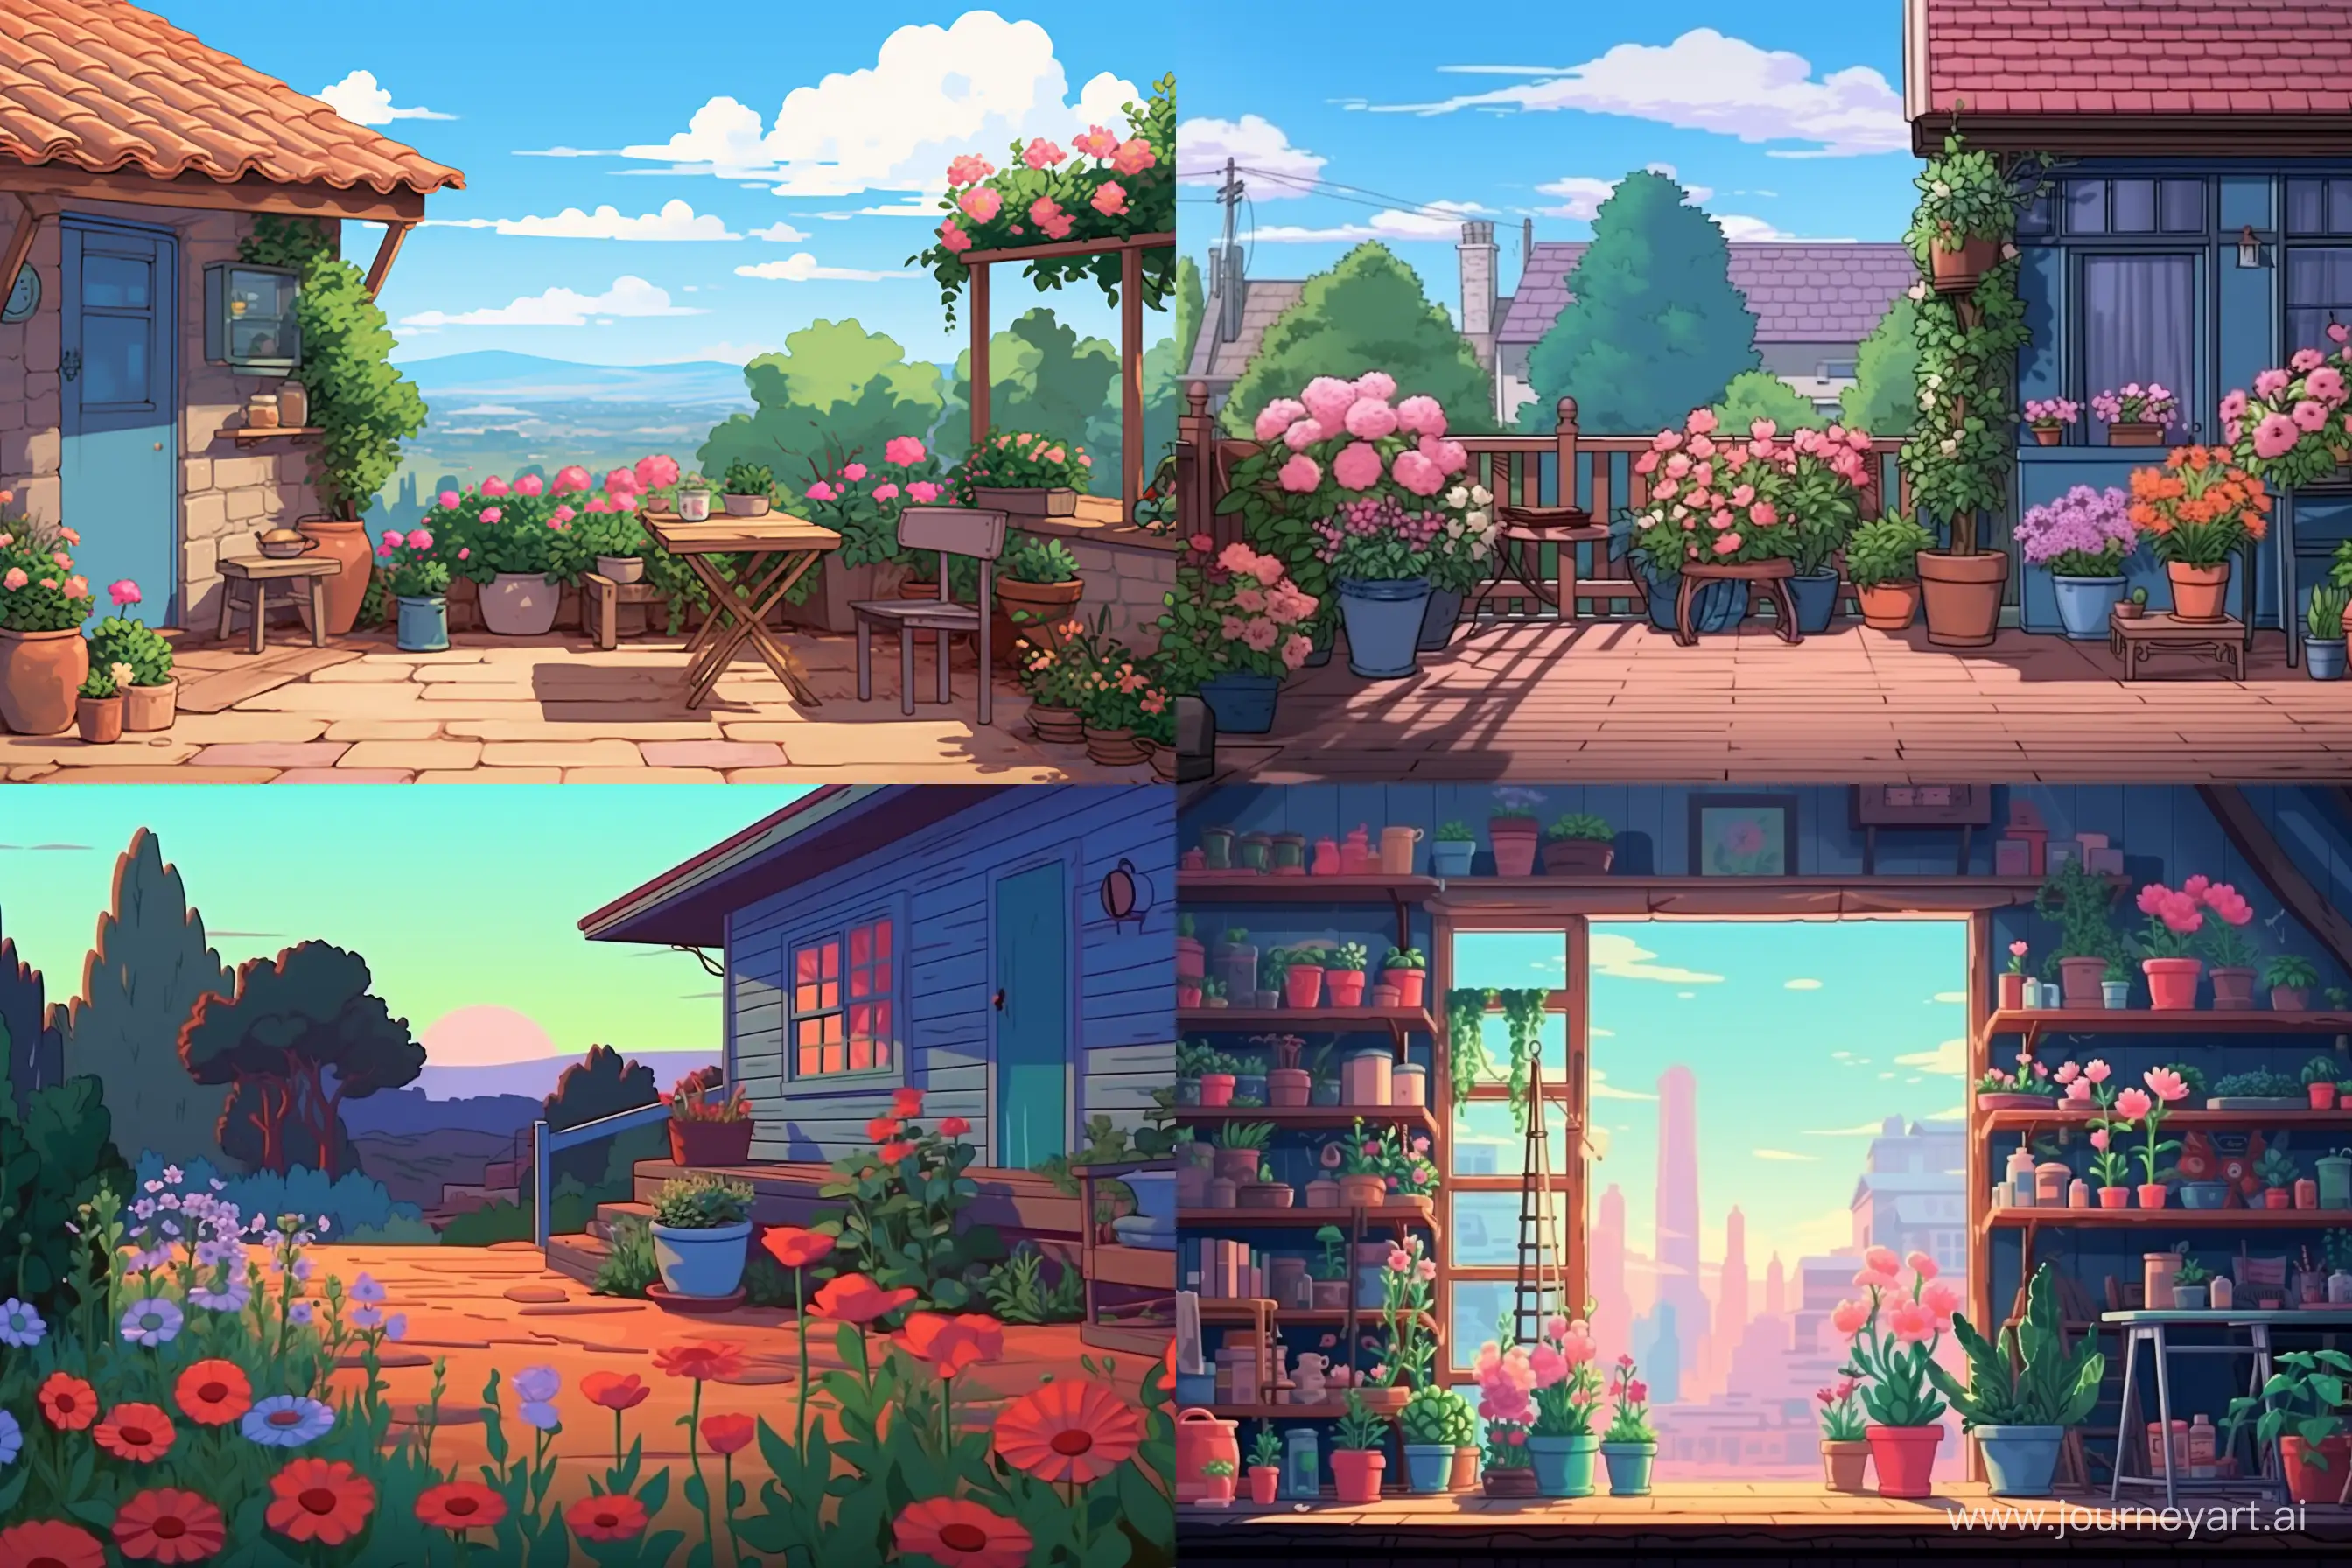 Charming-Blue-Brick-House-with-Vibrant-Flower-Pots-Retro-Studio-Ghibli-Scene